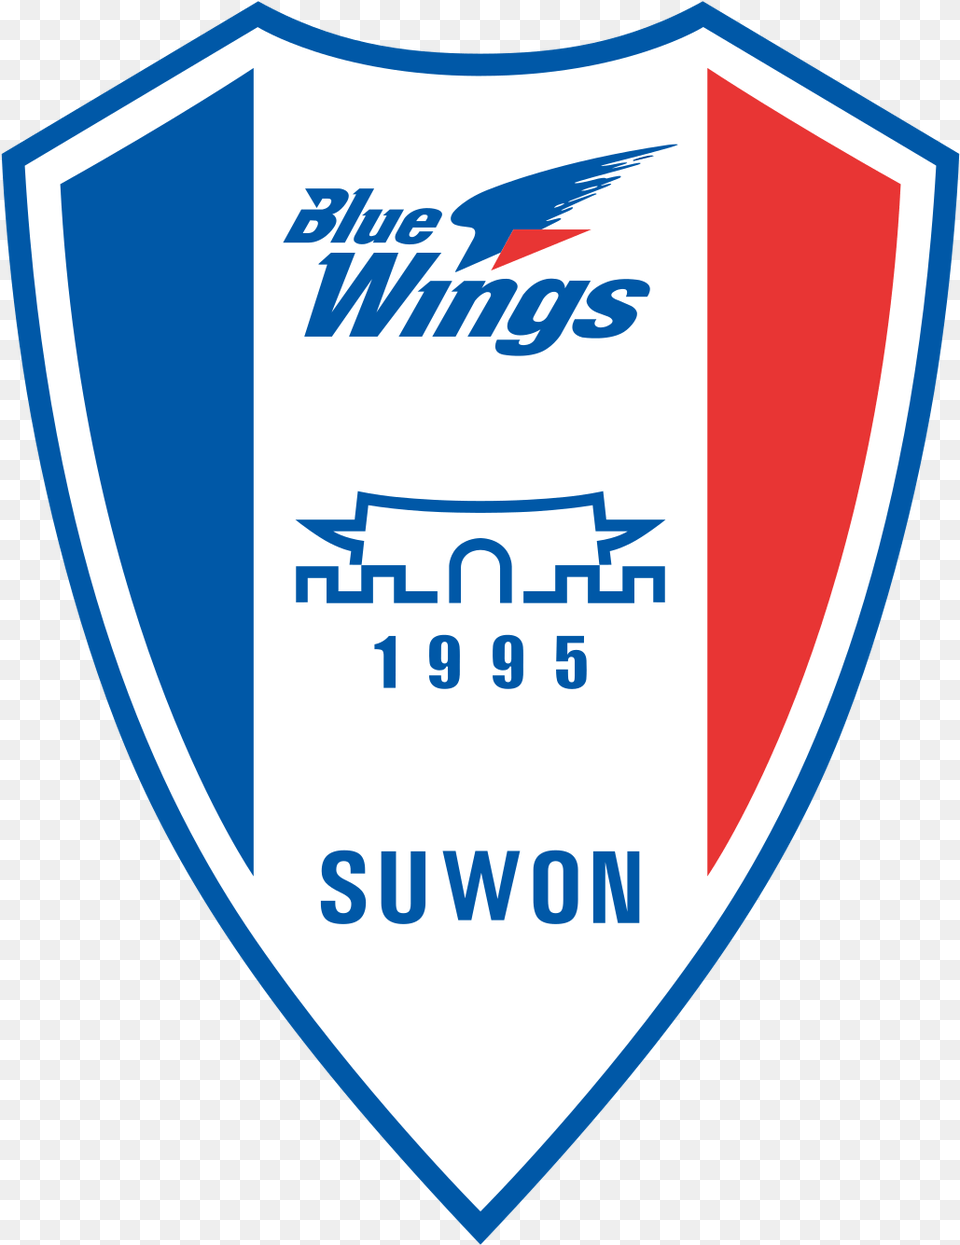 Suwon Samsung Bluewings Suwon Samsung Bluewings Logo, Armor, Shield Png Image